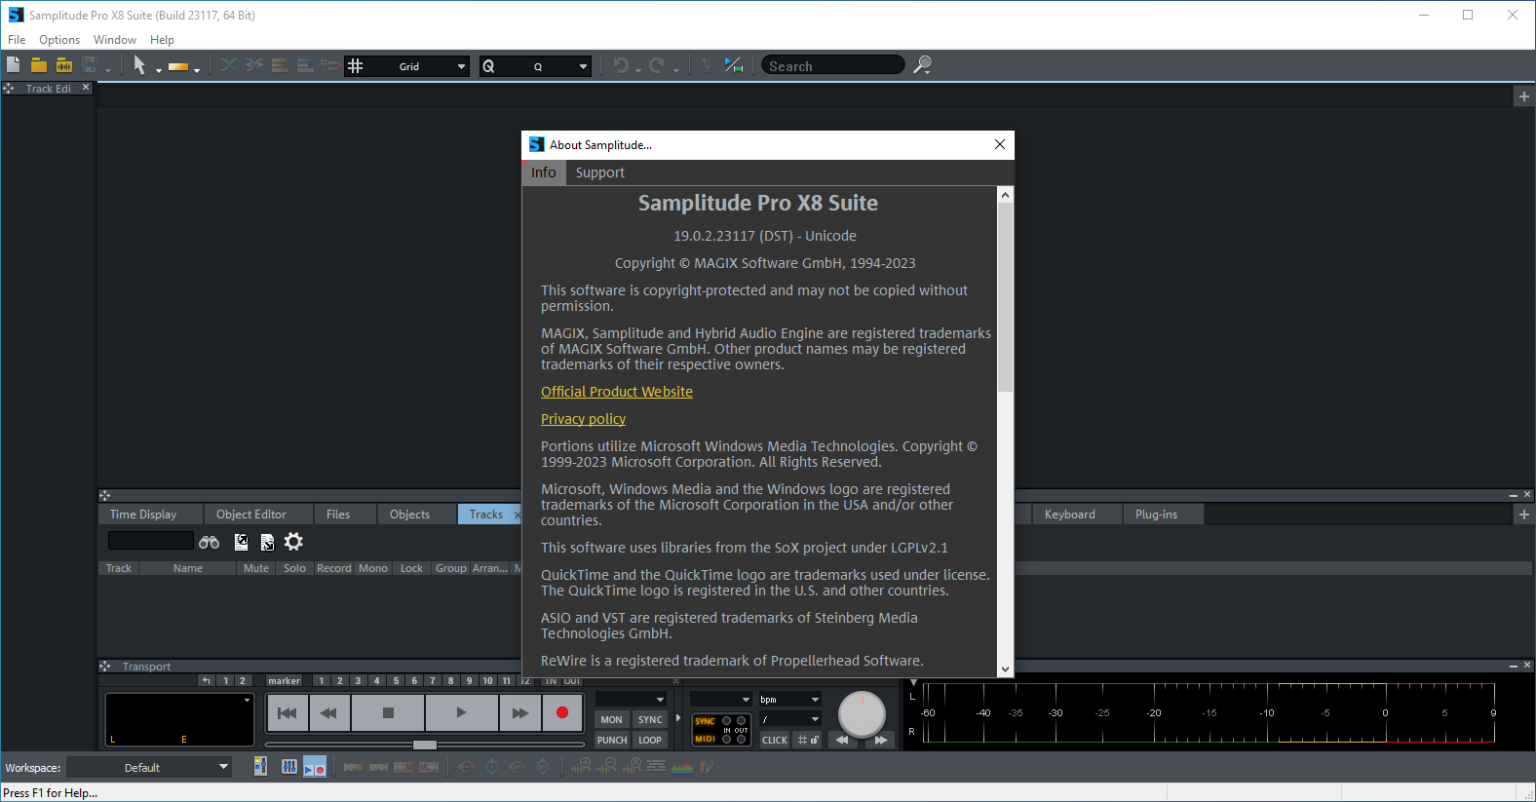 MAGIX Samplitude Pro X8 Suite 19.0.2.23117 for windows download free